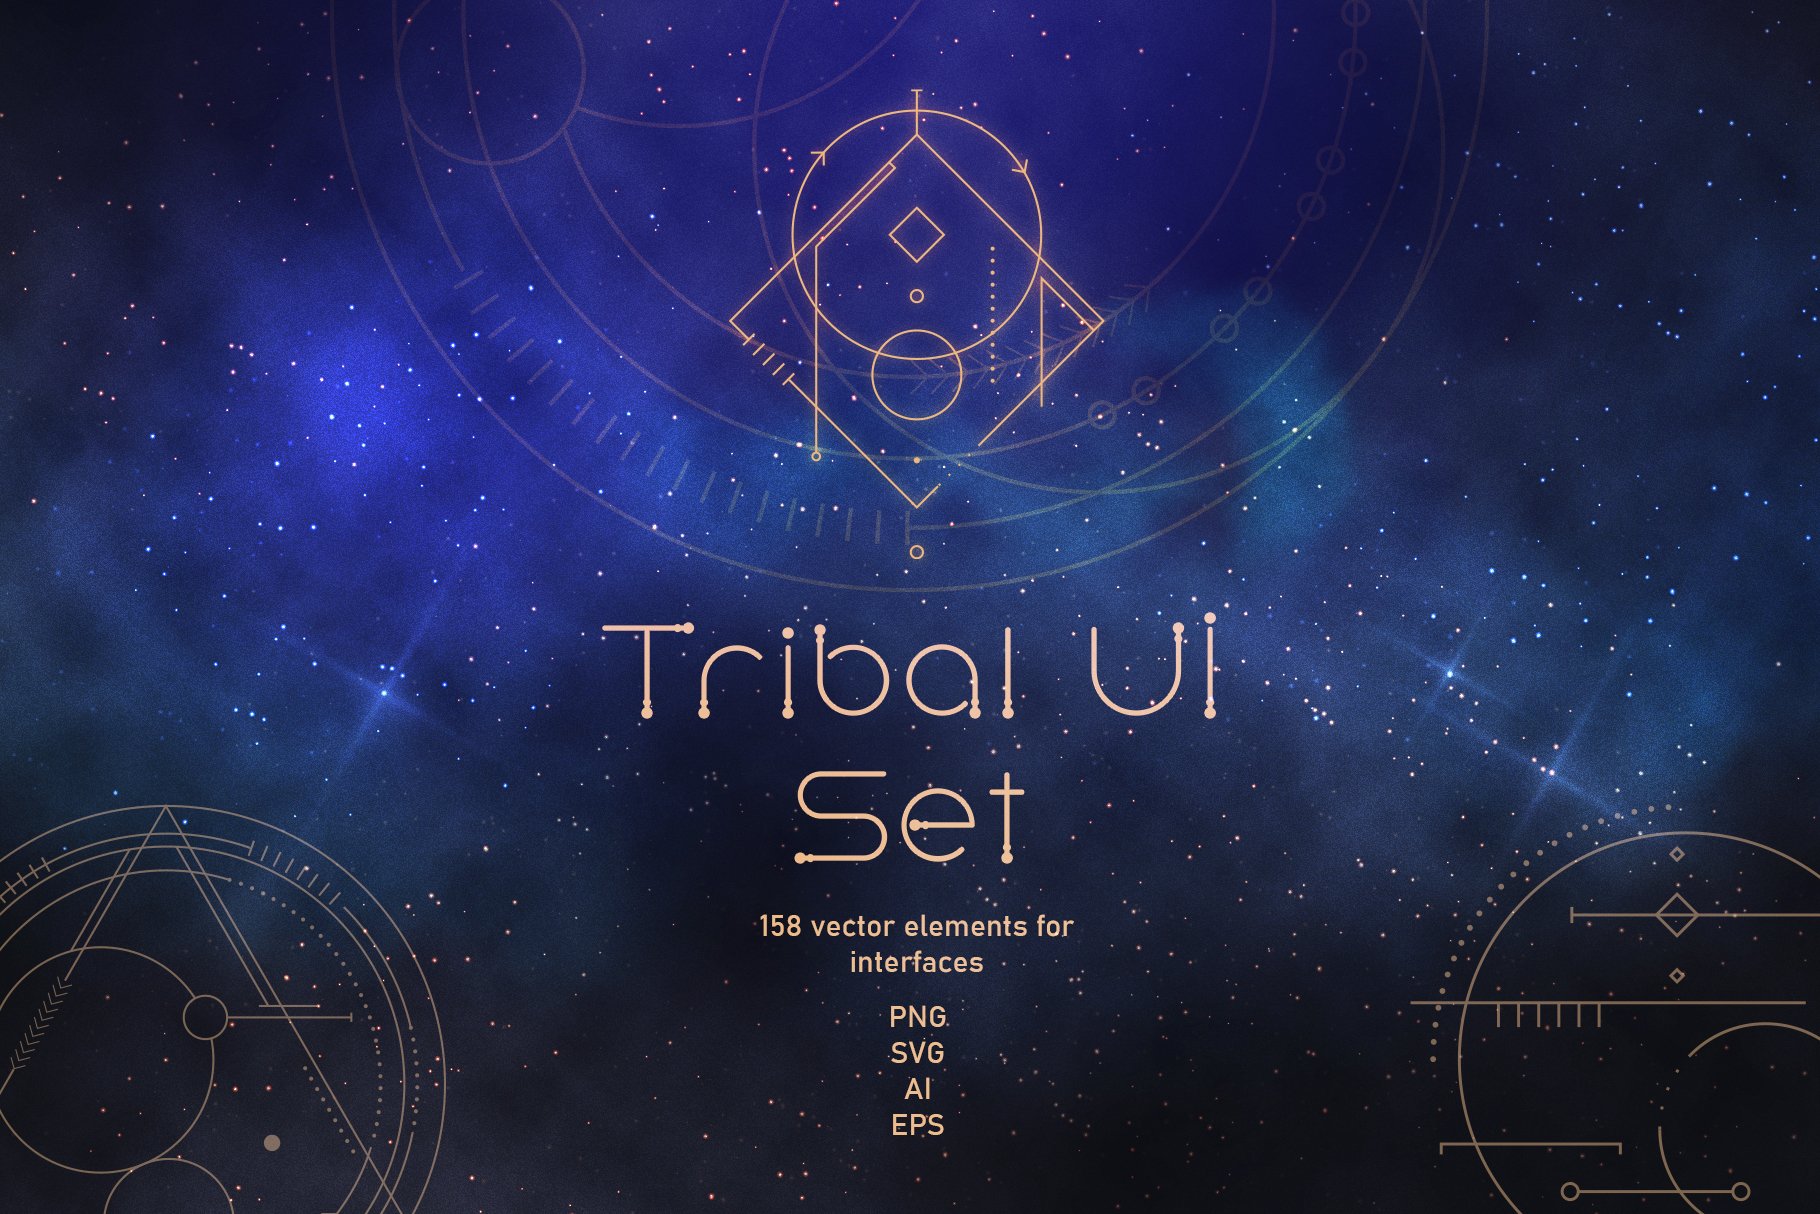 Tribal UI Set cover image.